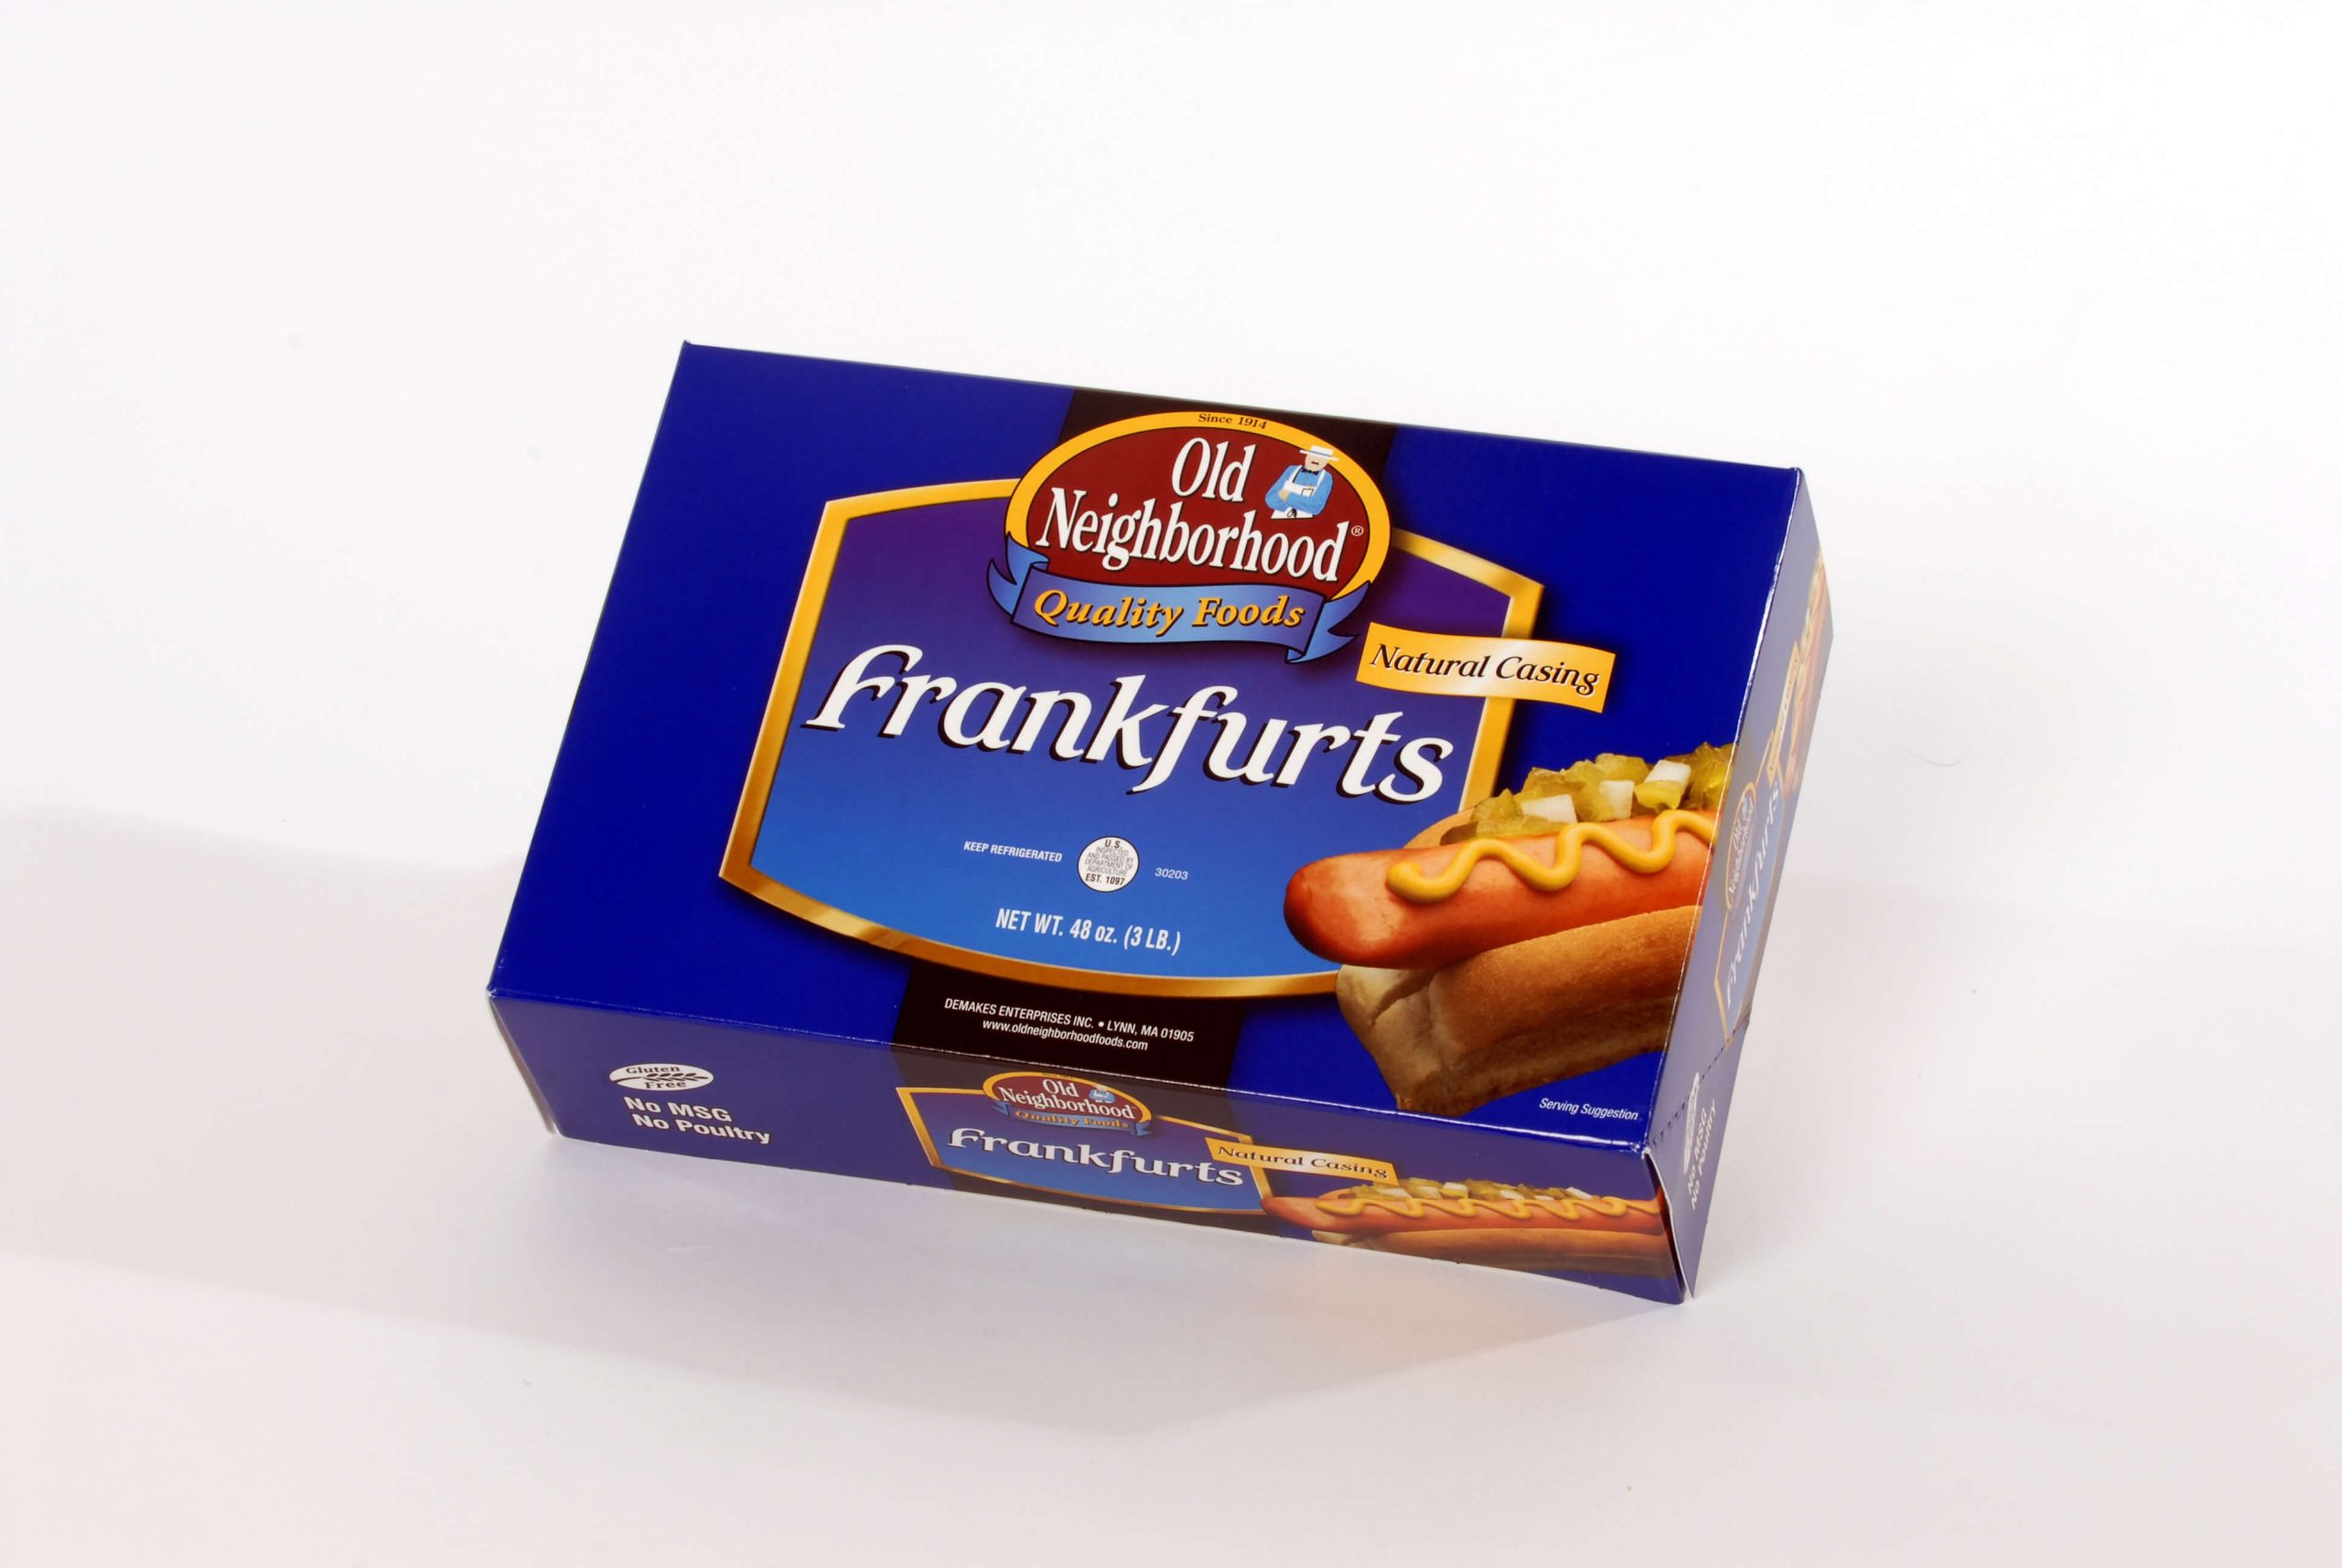 Frankfurts branded box